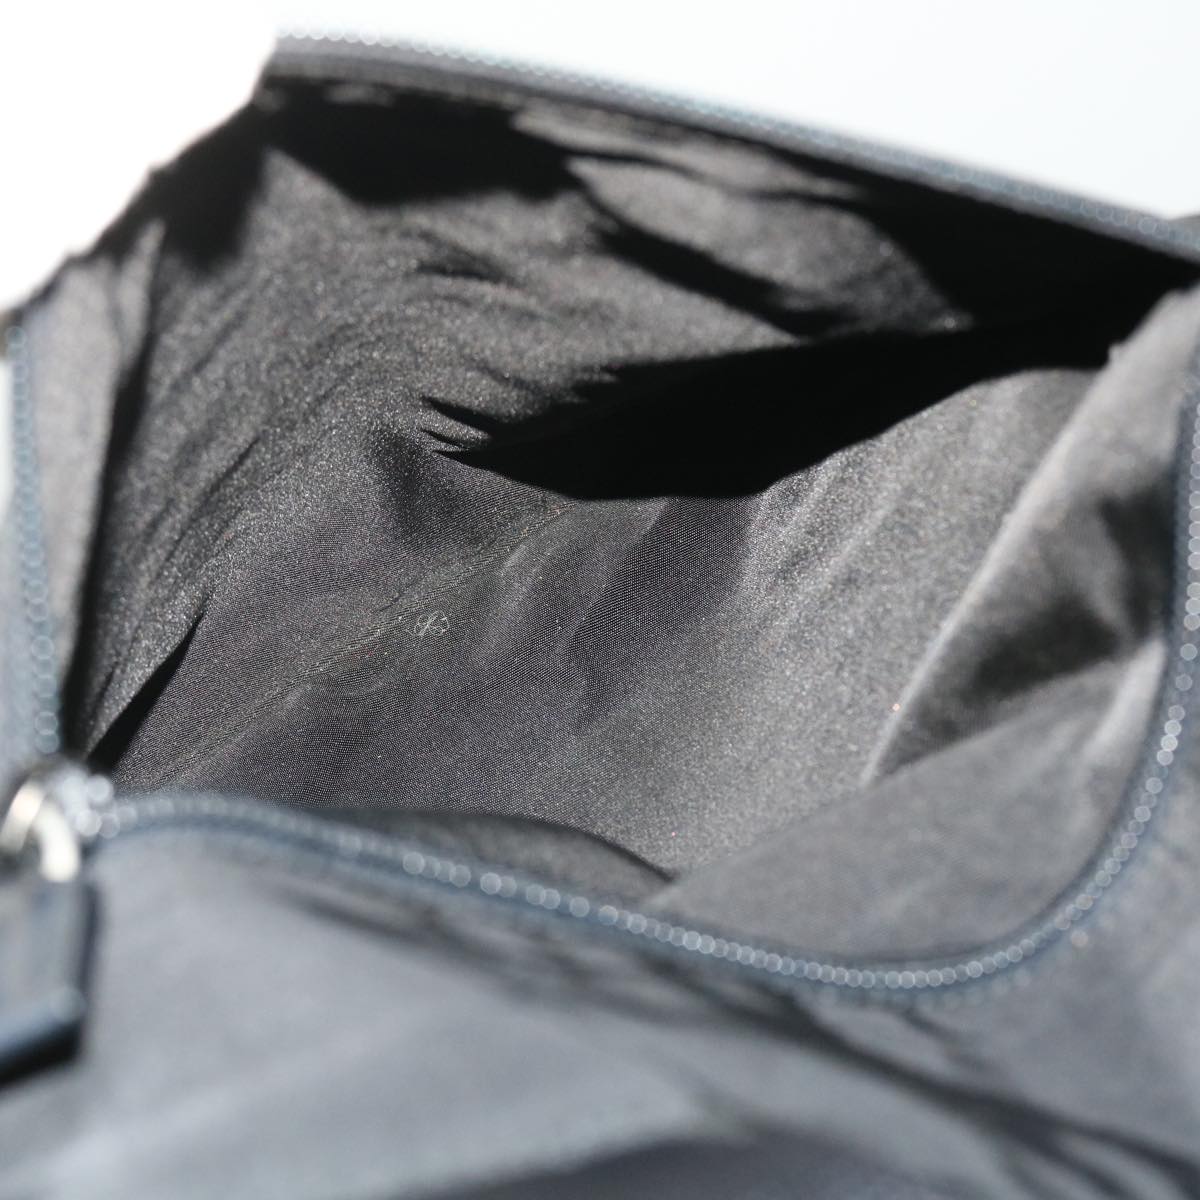 PRADA Tote Bag Nylon Black Auth 53702